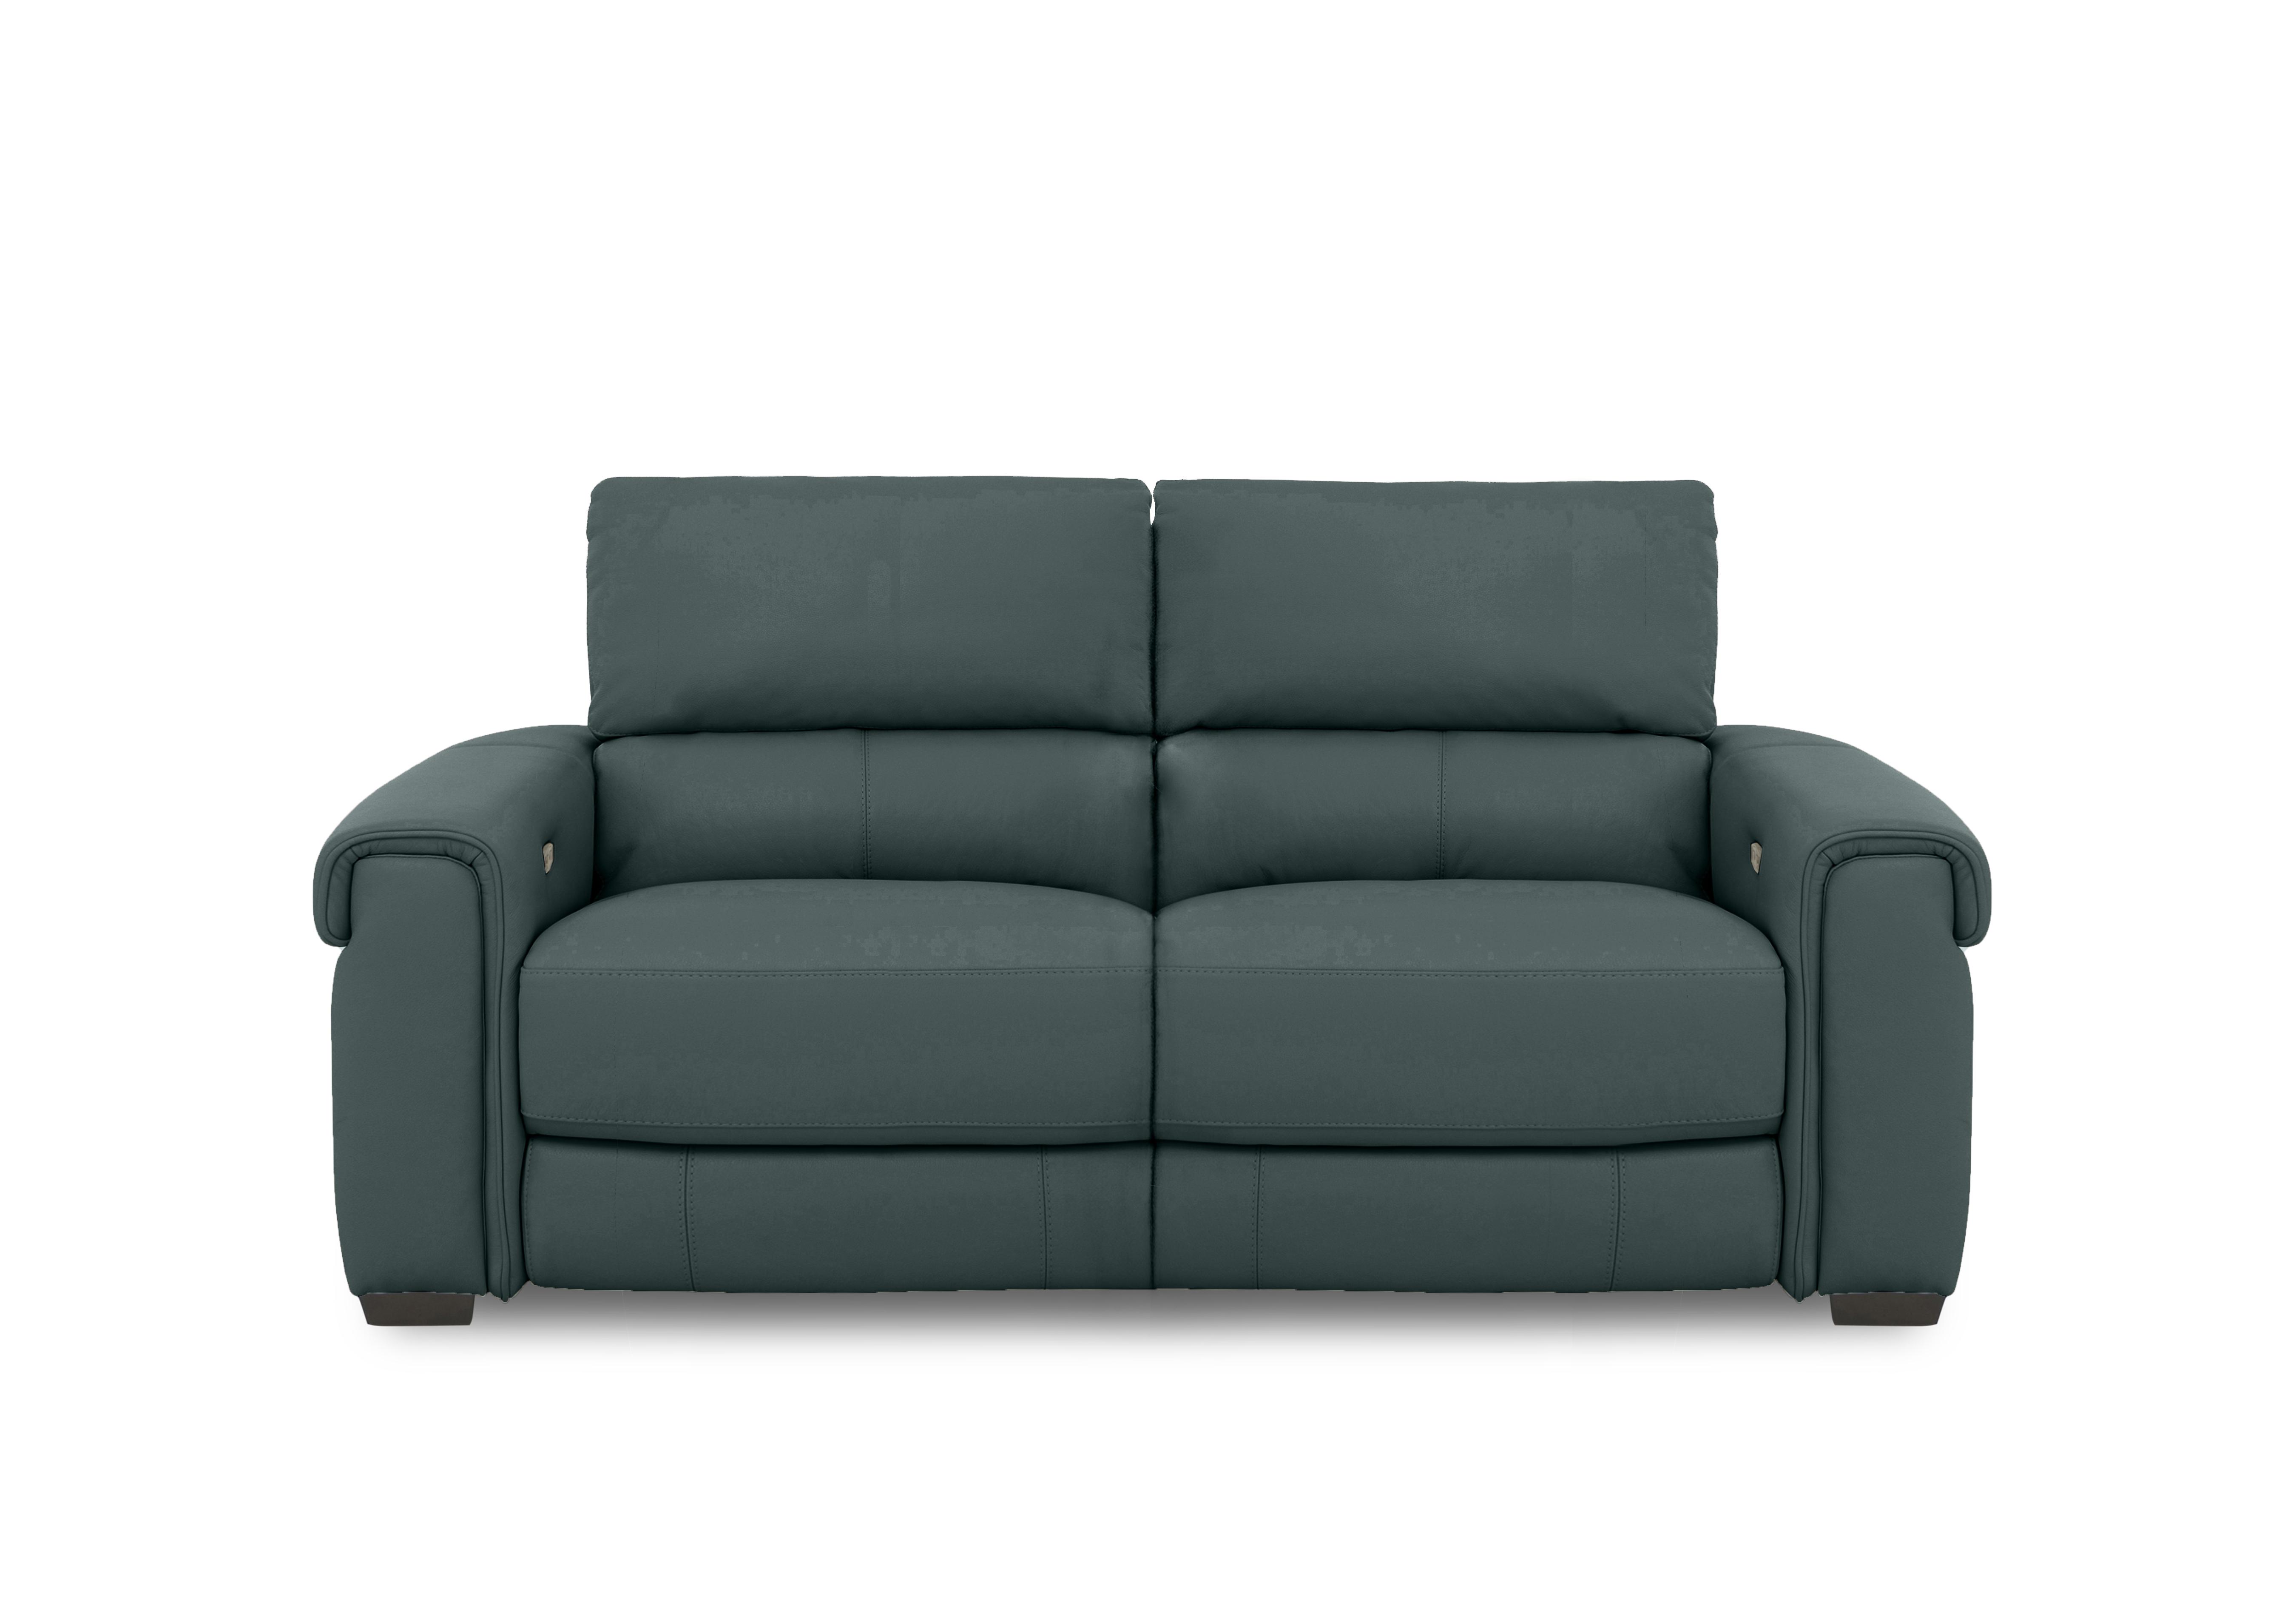 Nixon Leather 3 Seater Sofa in Bv-301e Lake Green on Furniture Village